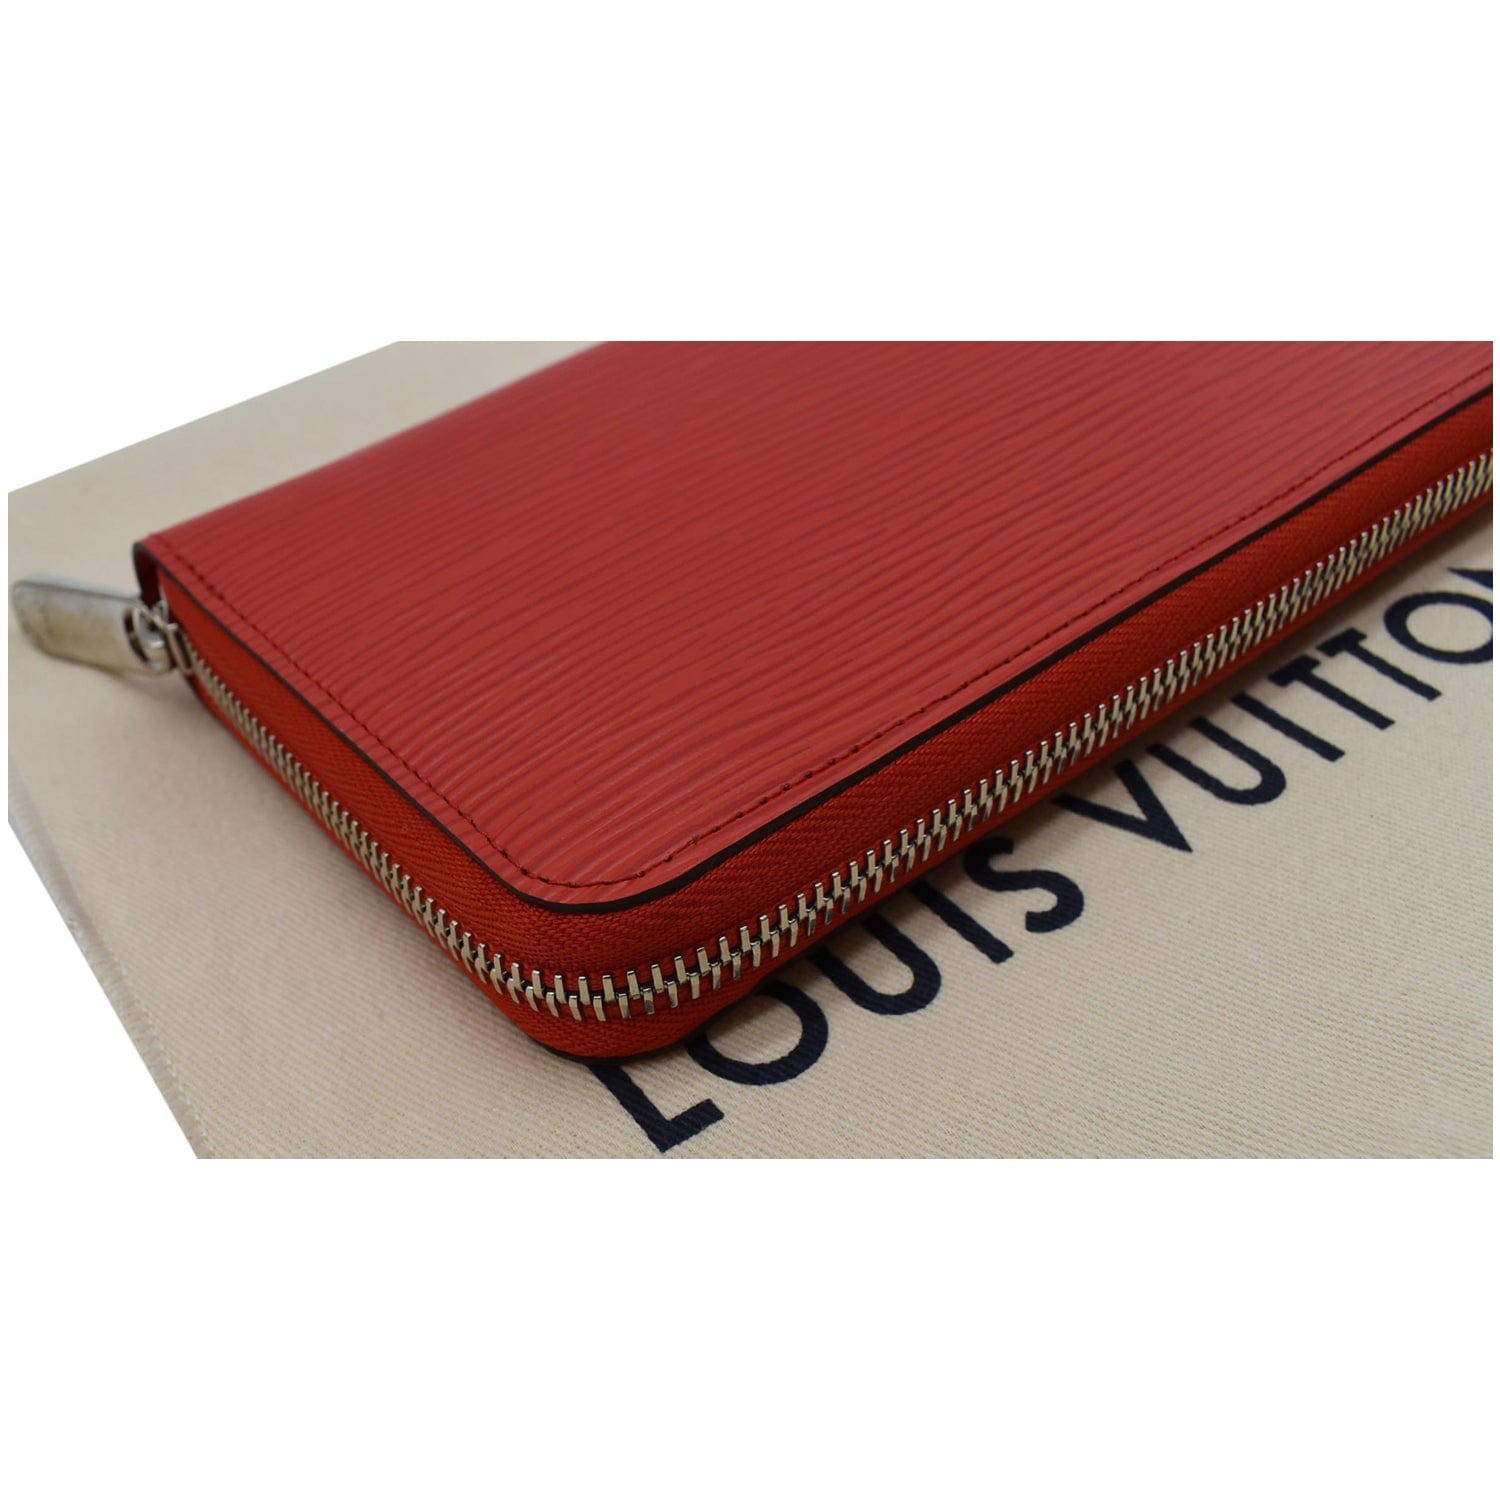 Circa 2010's Rare Louis Vuitton Wallet or Clutch Zippy Red Alligator Wallet